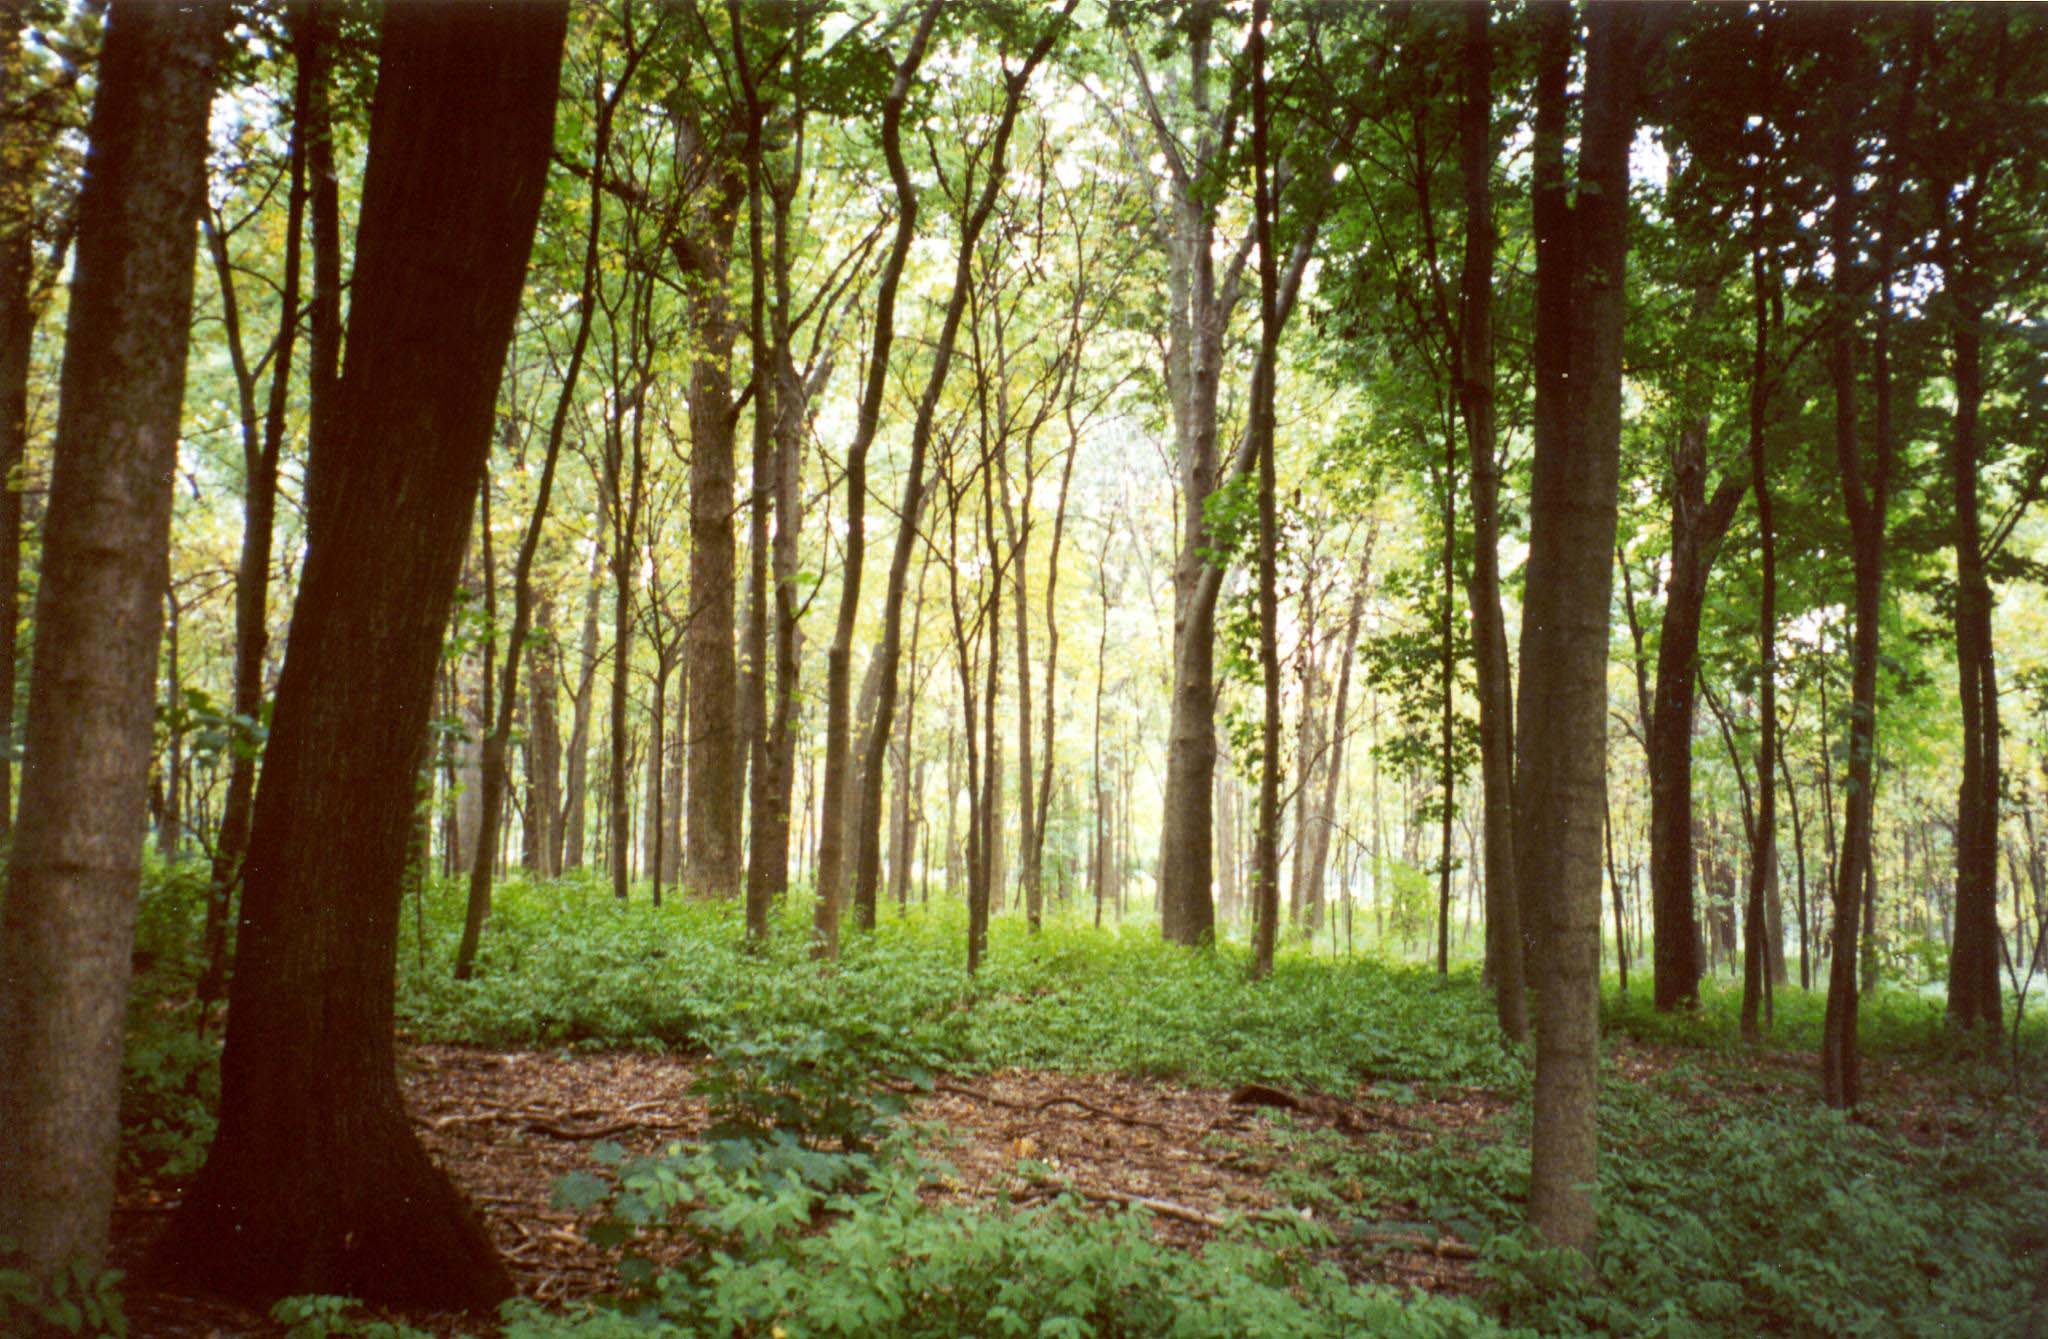 Woodland trees